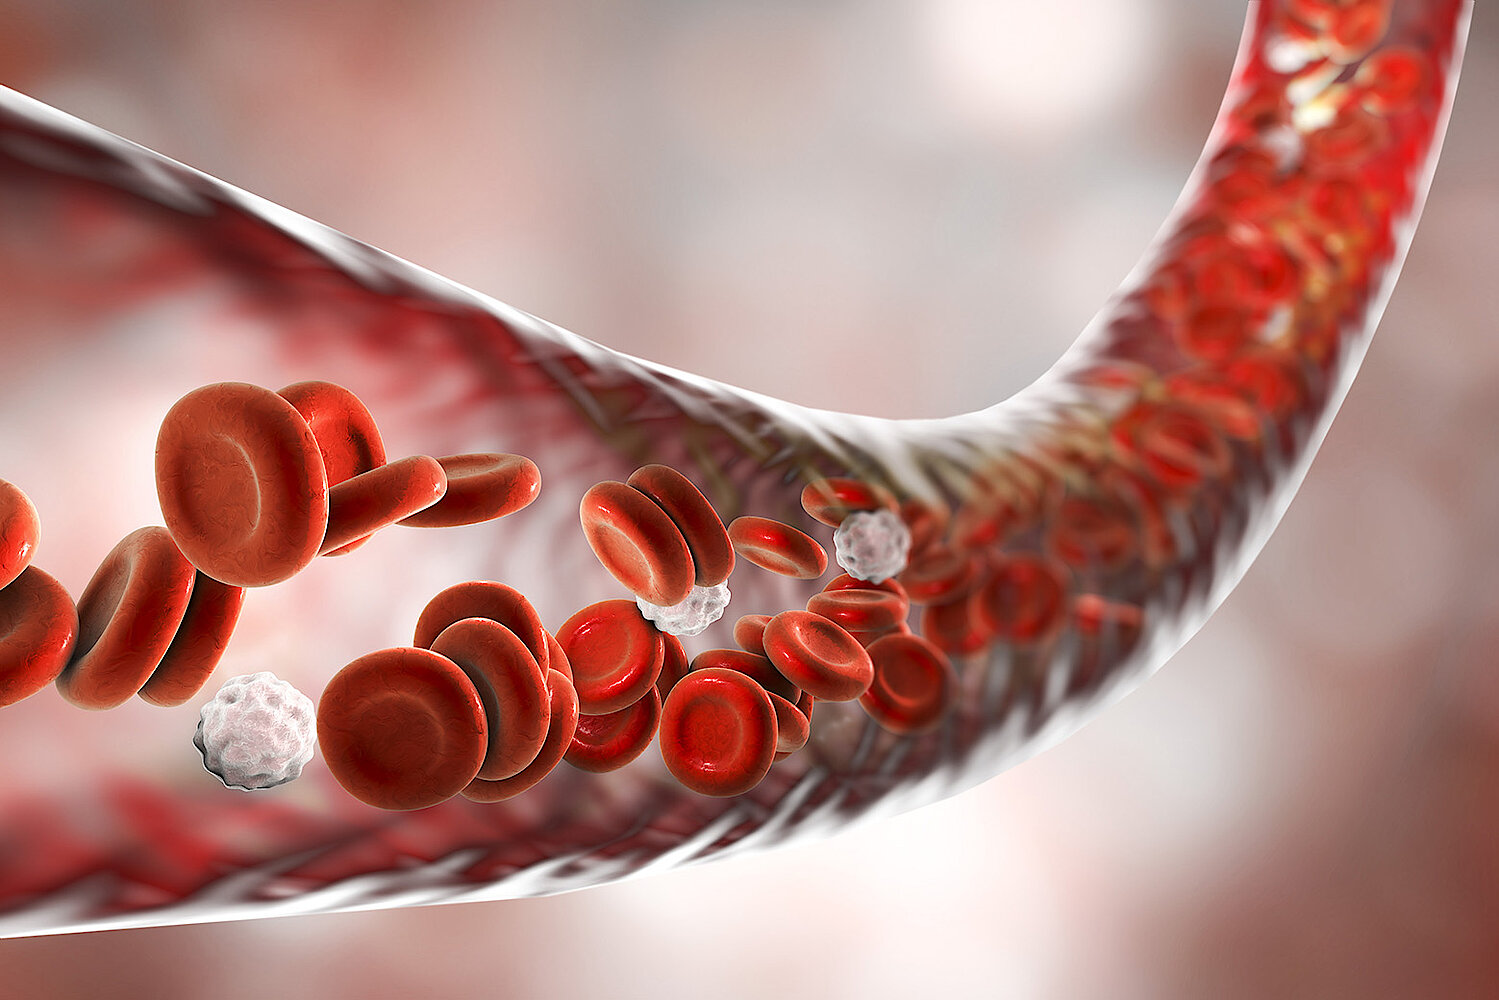 Three dimensional illustration of blood vessel with flowing erythrocytes and leukocytes.